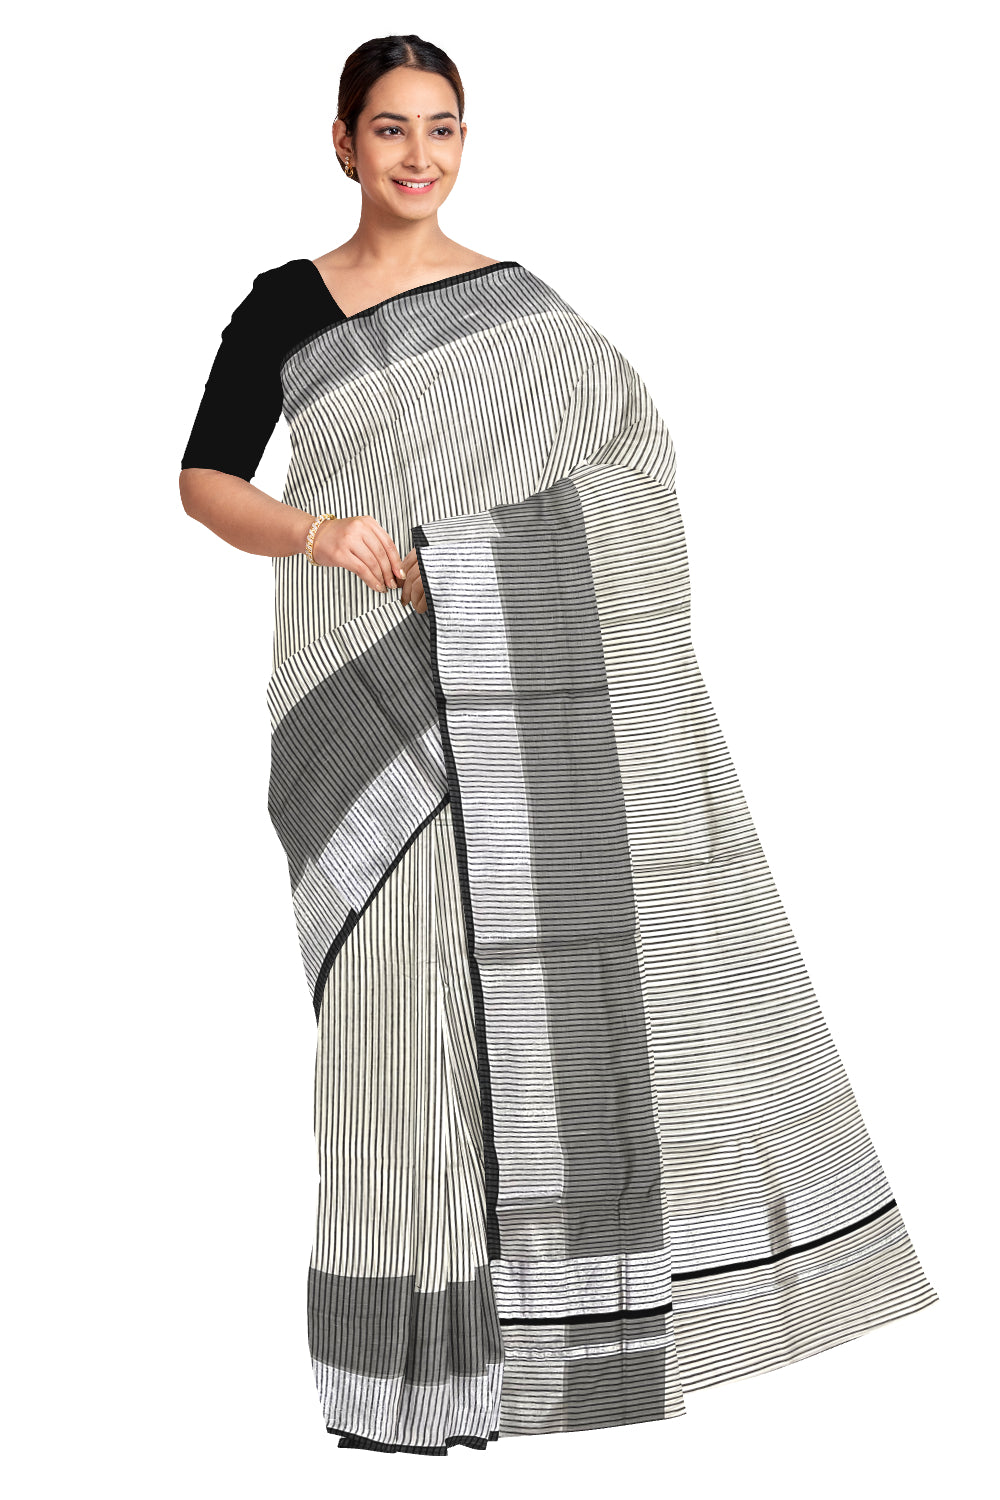 Pure Cotton Kerala Saree with Black Kasavu Lines Design Saree with Black Silver Border